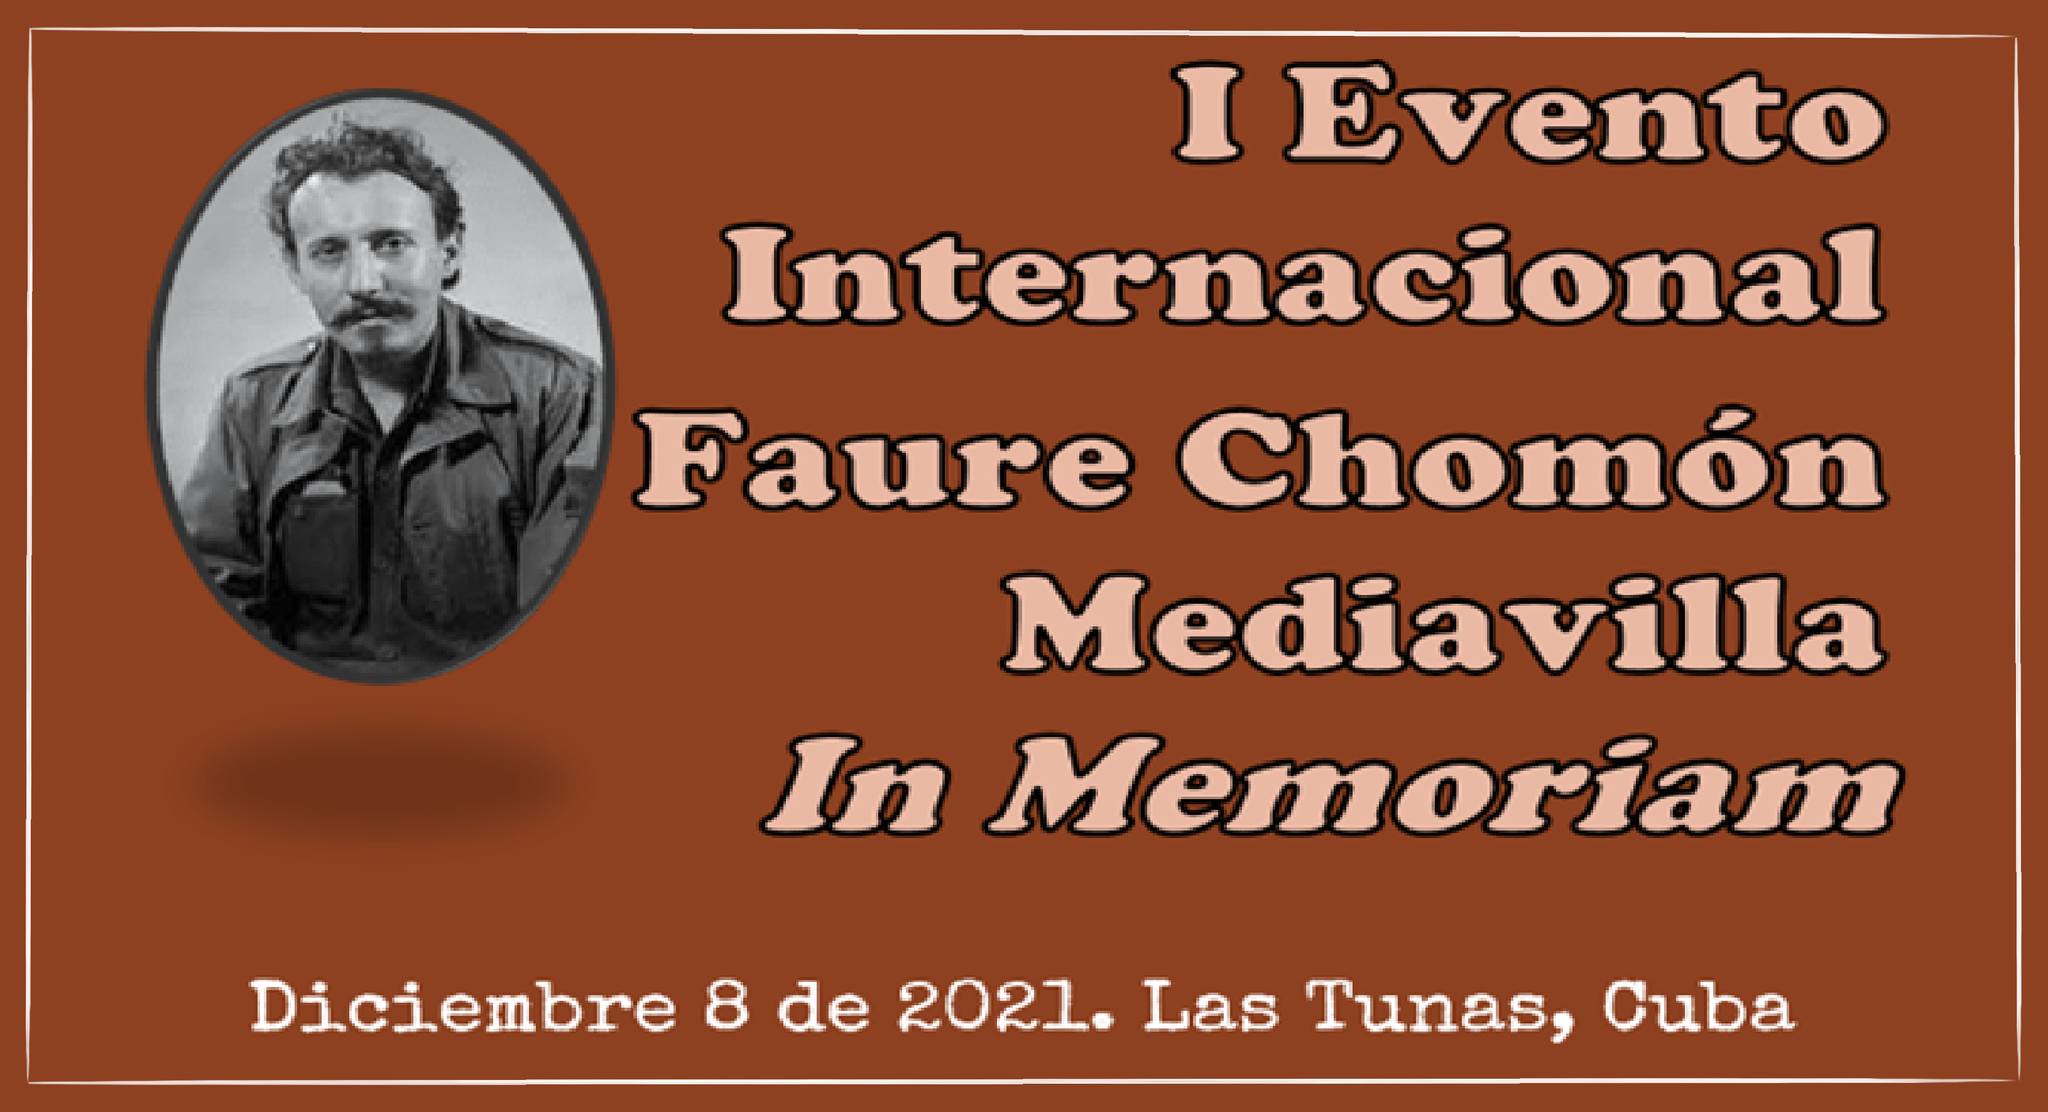 1st "Faure Chomón Mediavilla" International Event